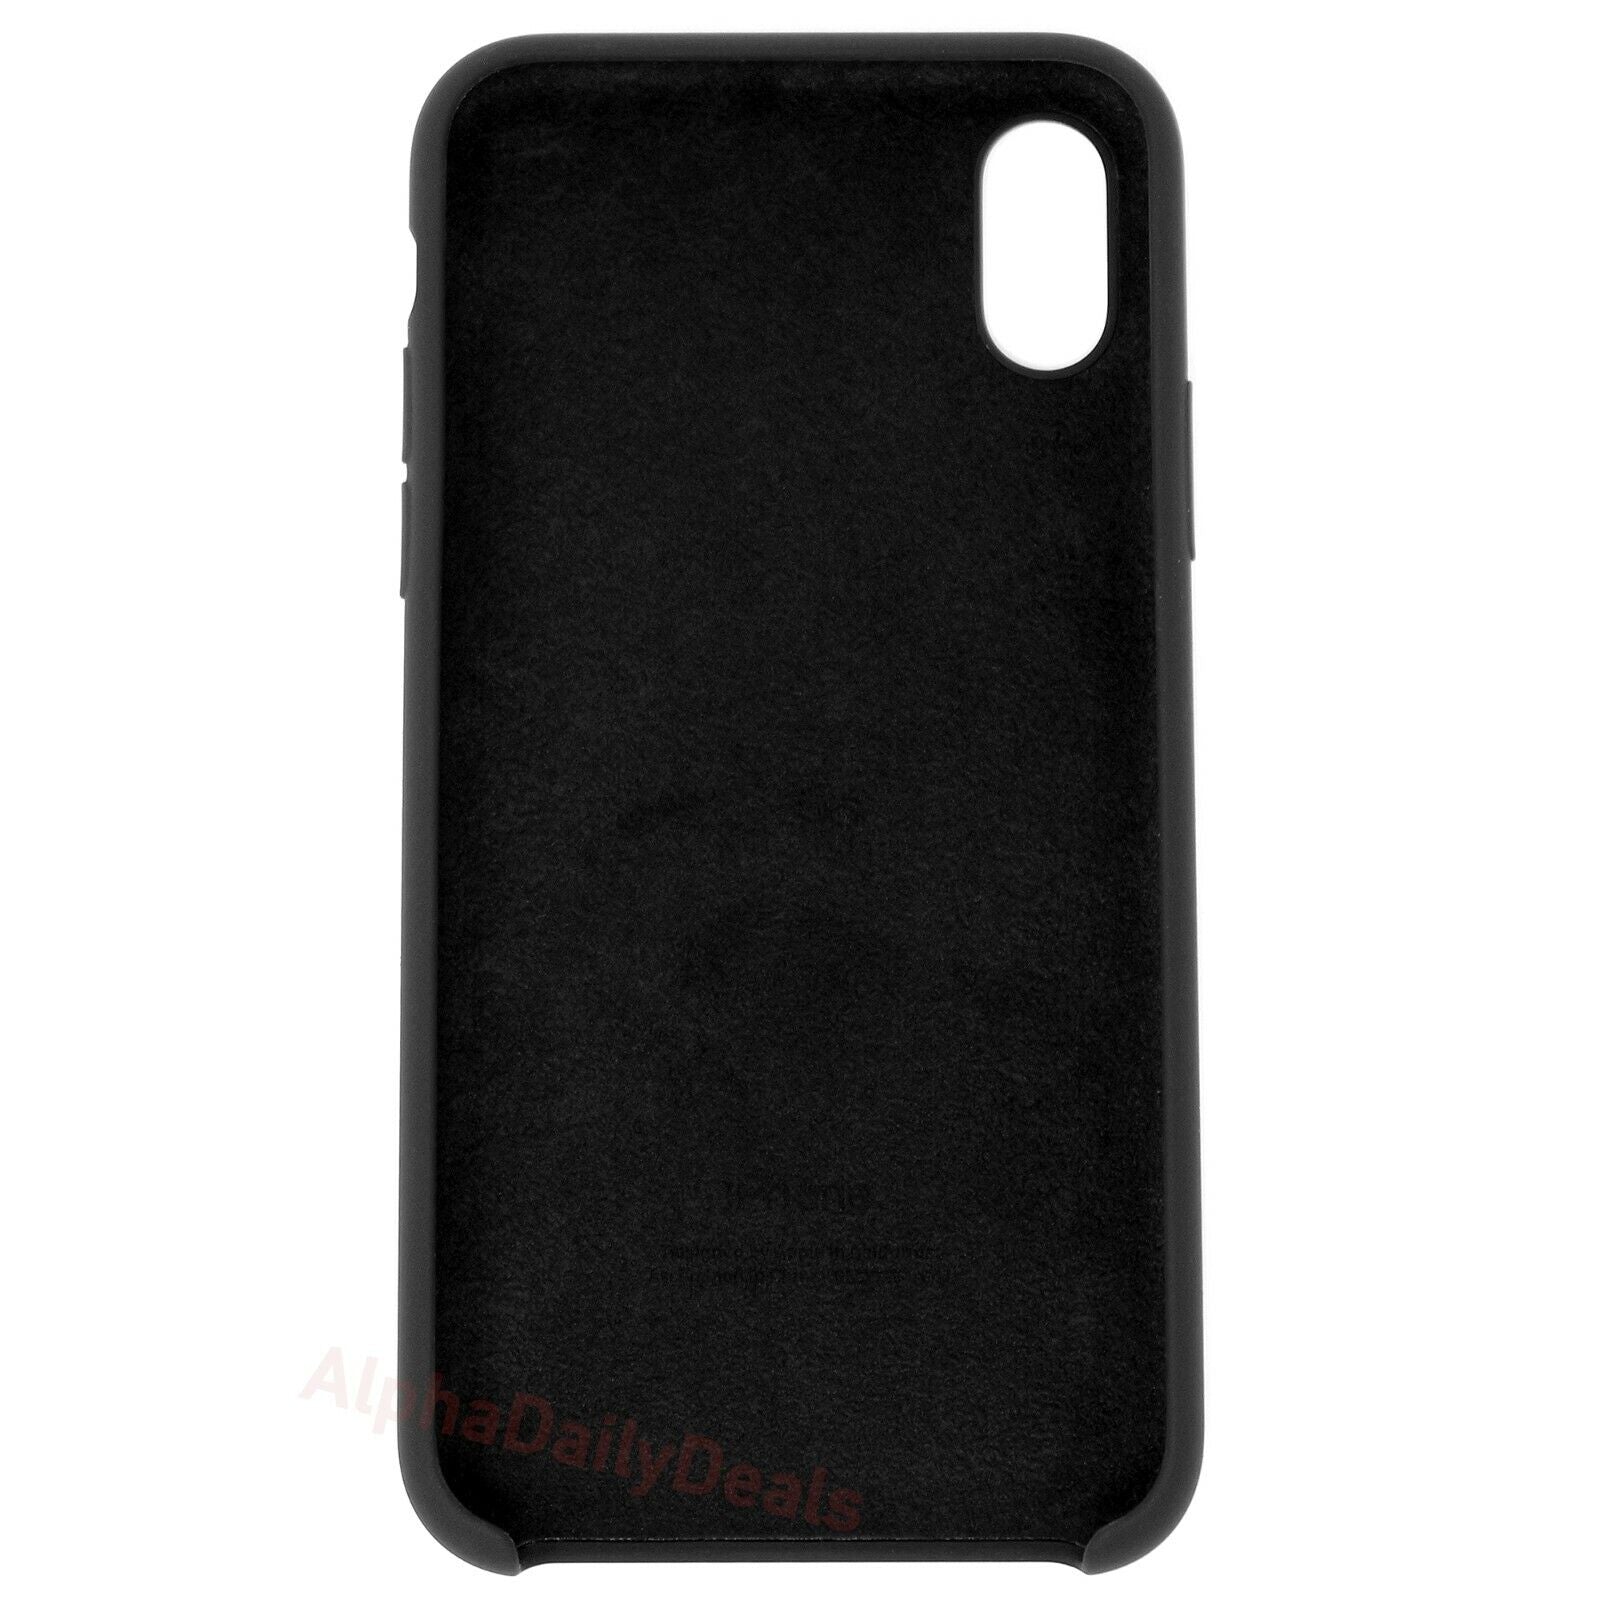 Genuine OEM Apple iPhone X Black Silicone Case NEW SEALED